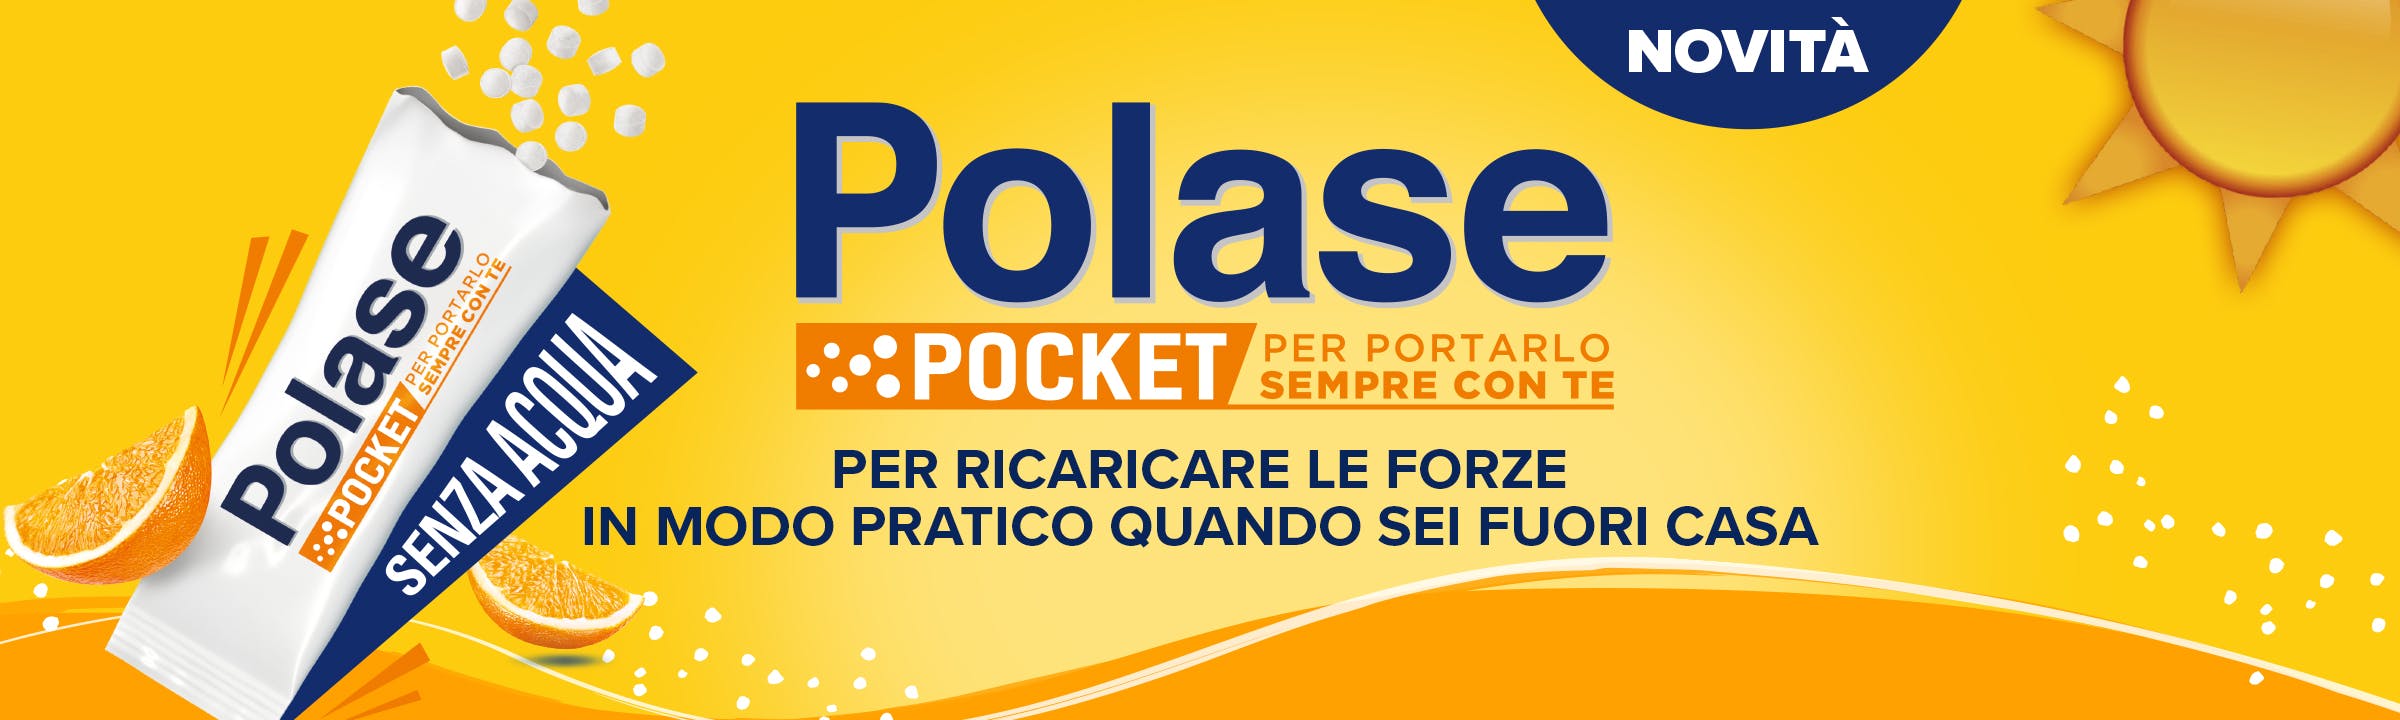 Polase Pocket